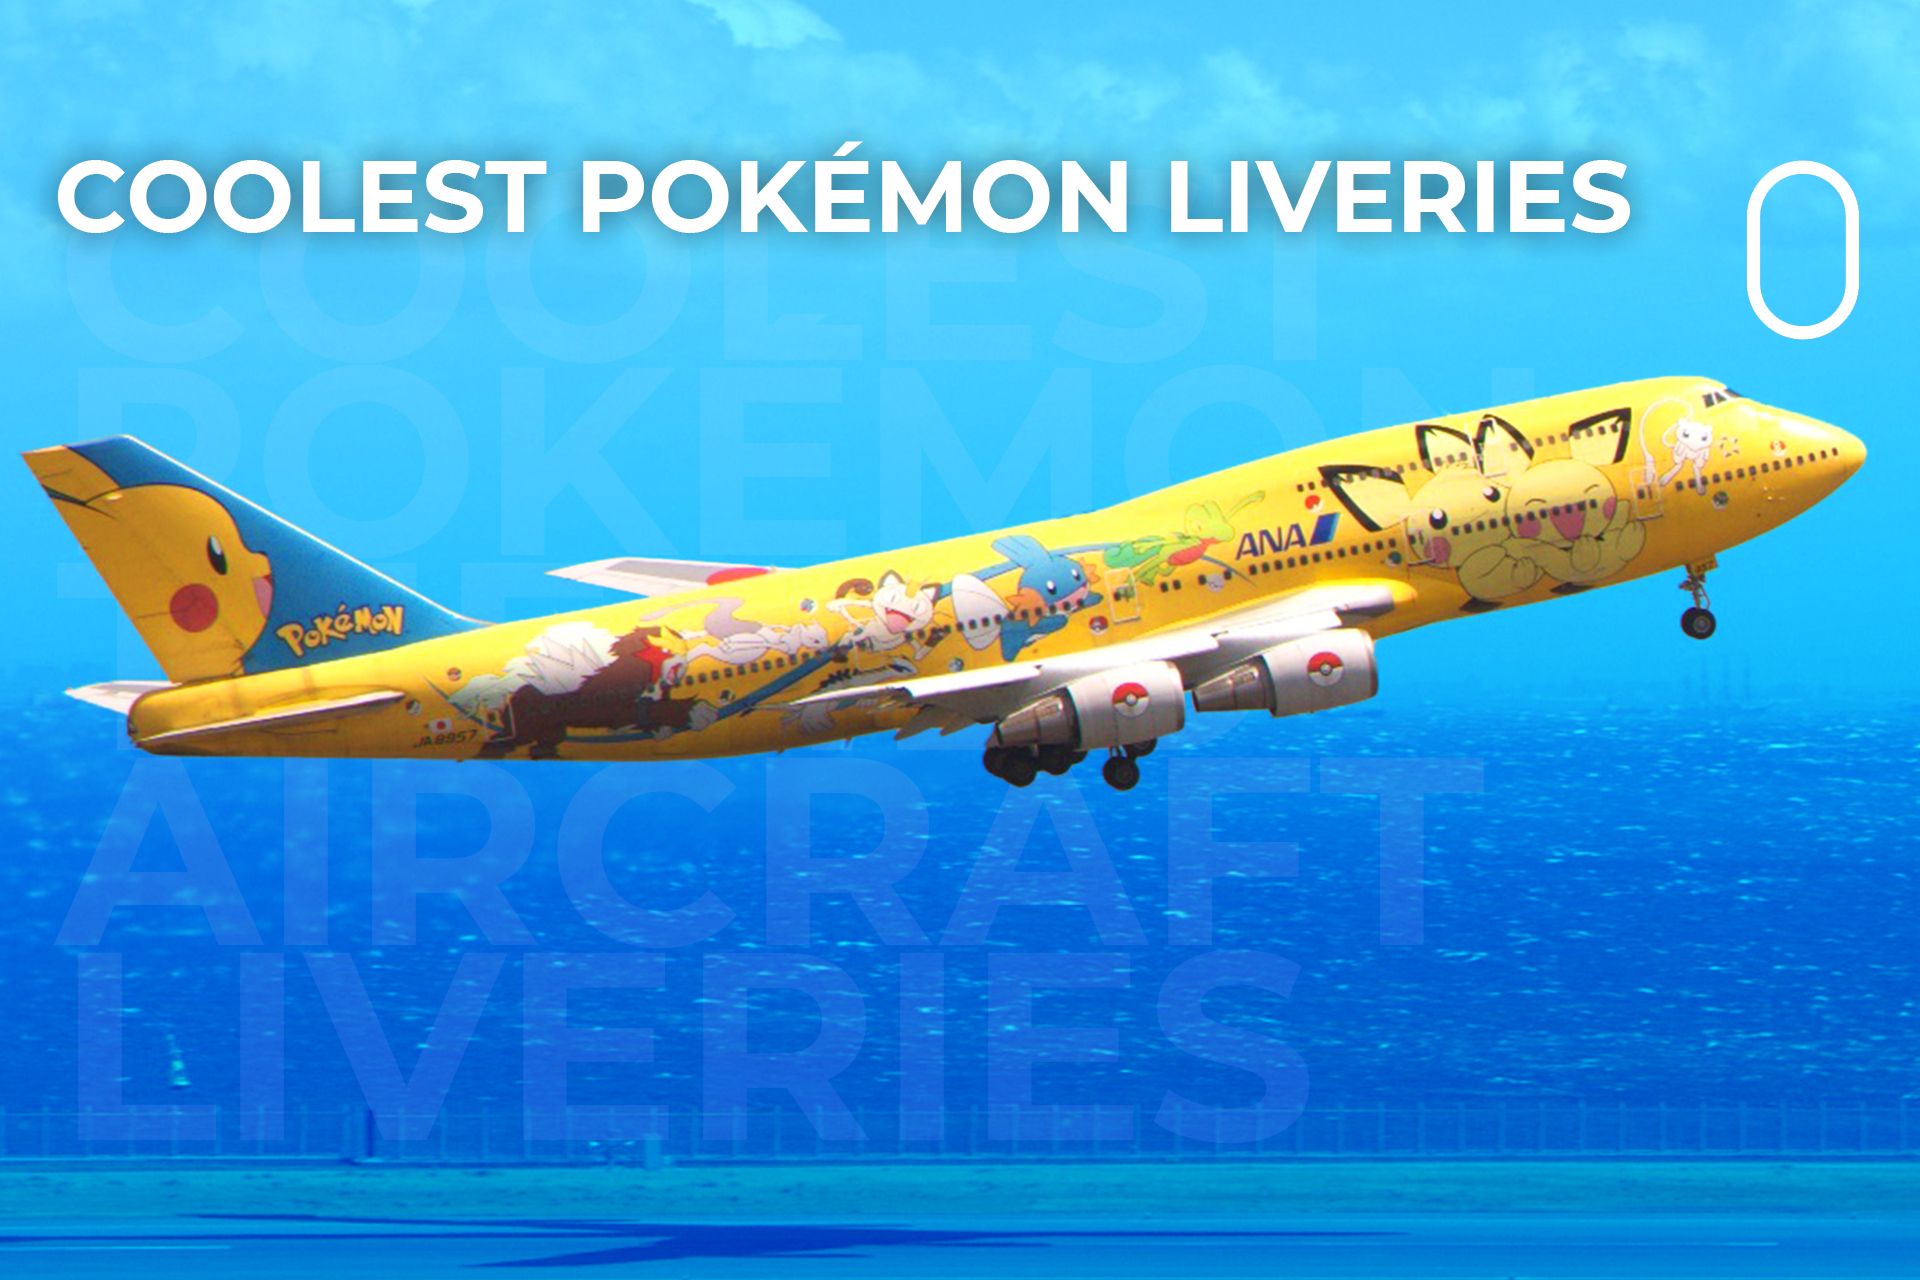 Top 5: The Coolest Pokémon-Themed Aircraft Liveries